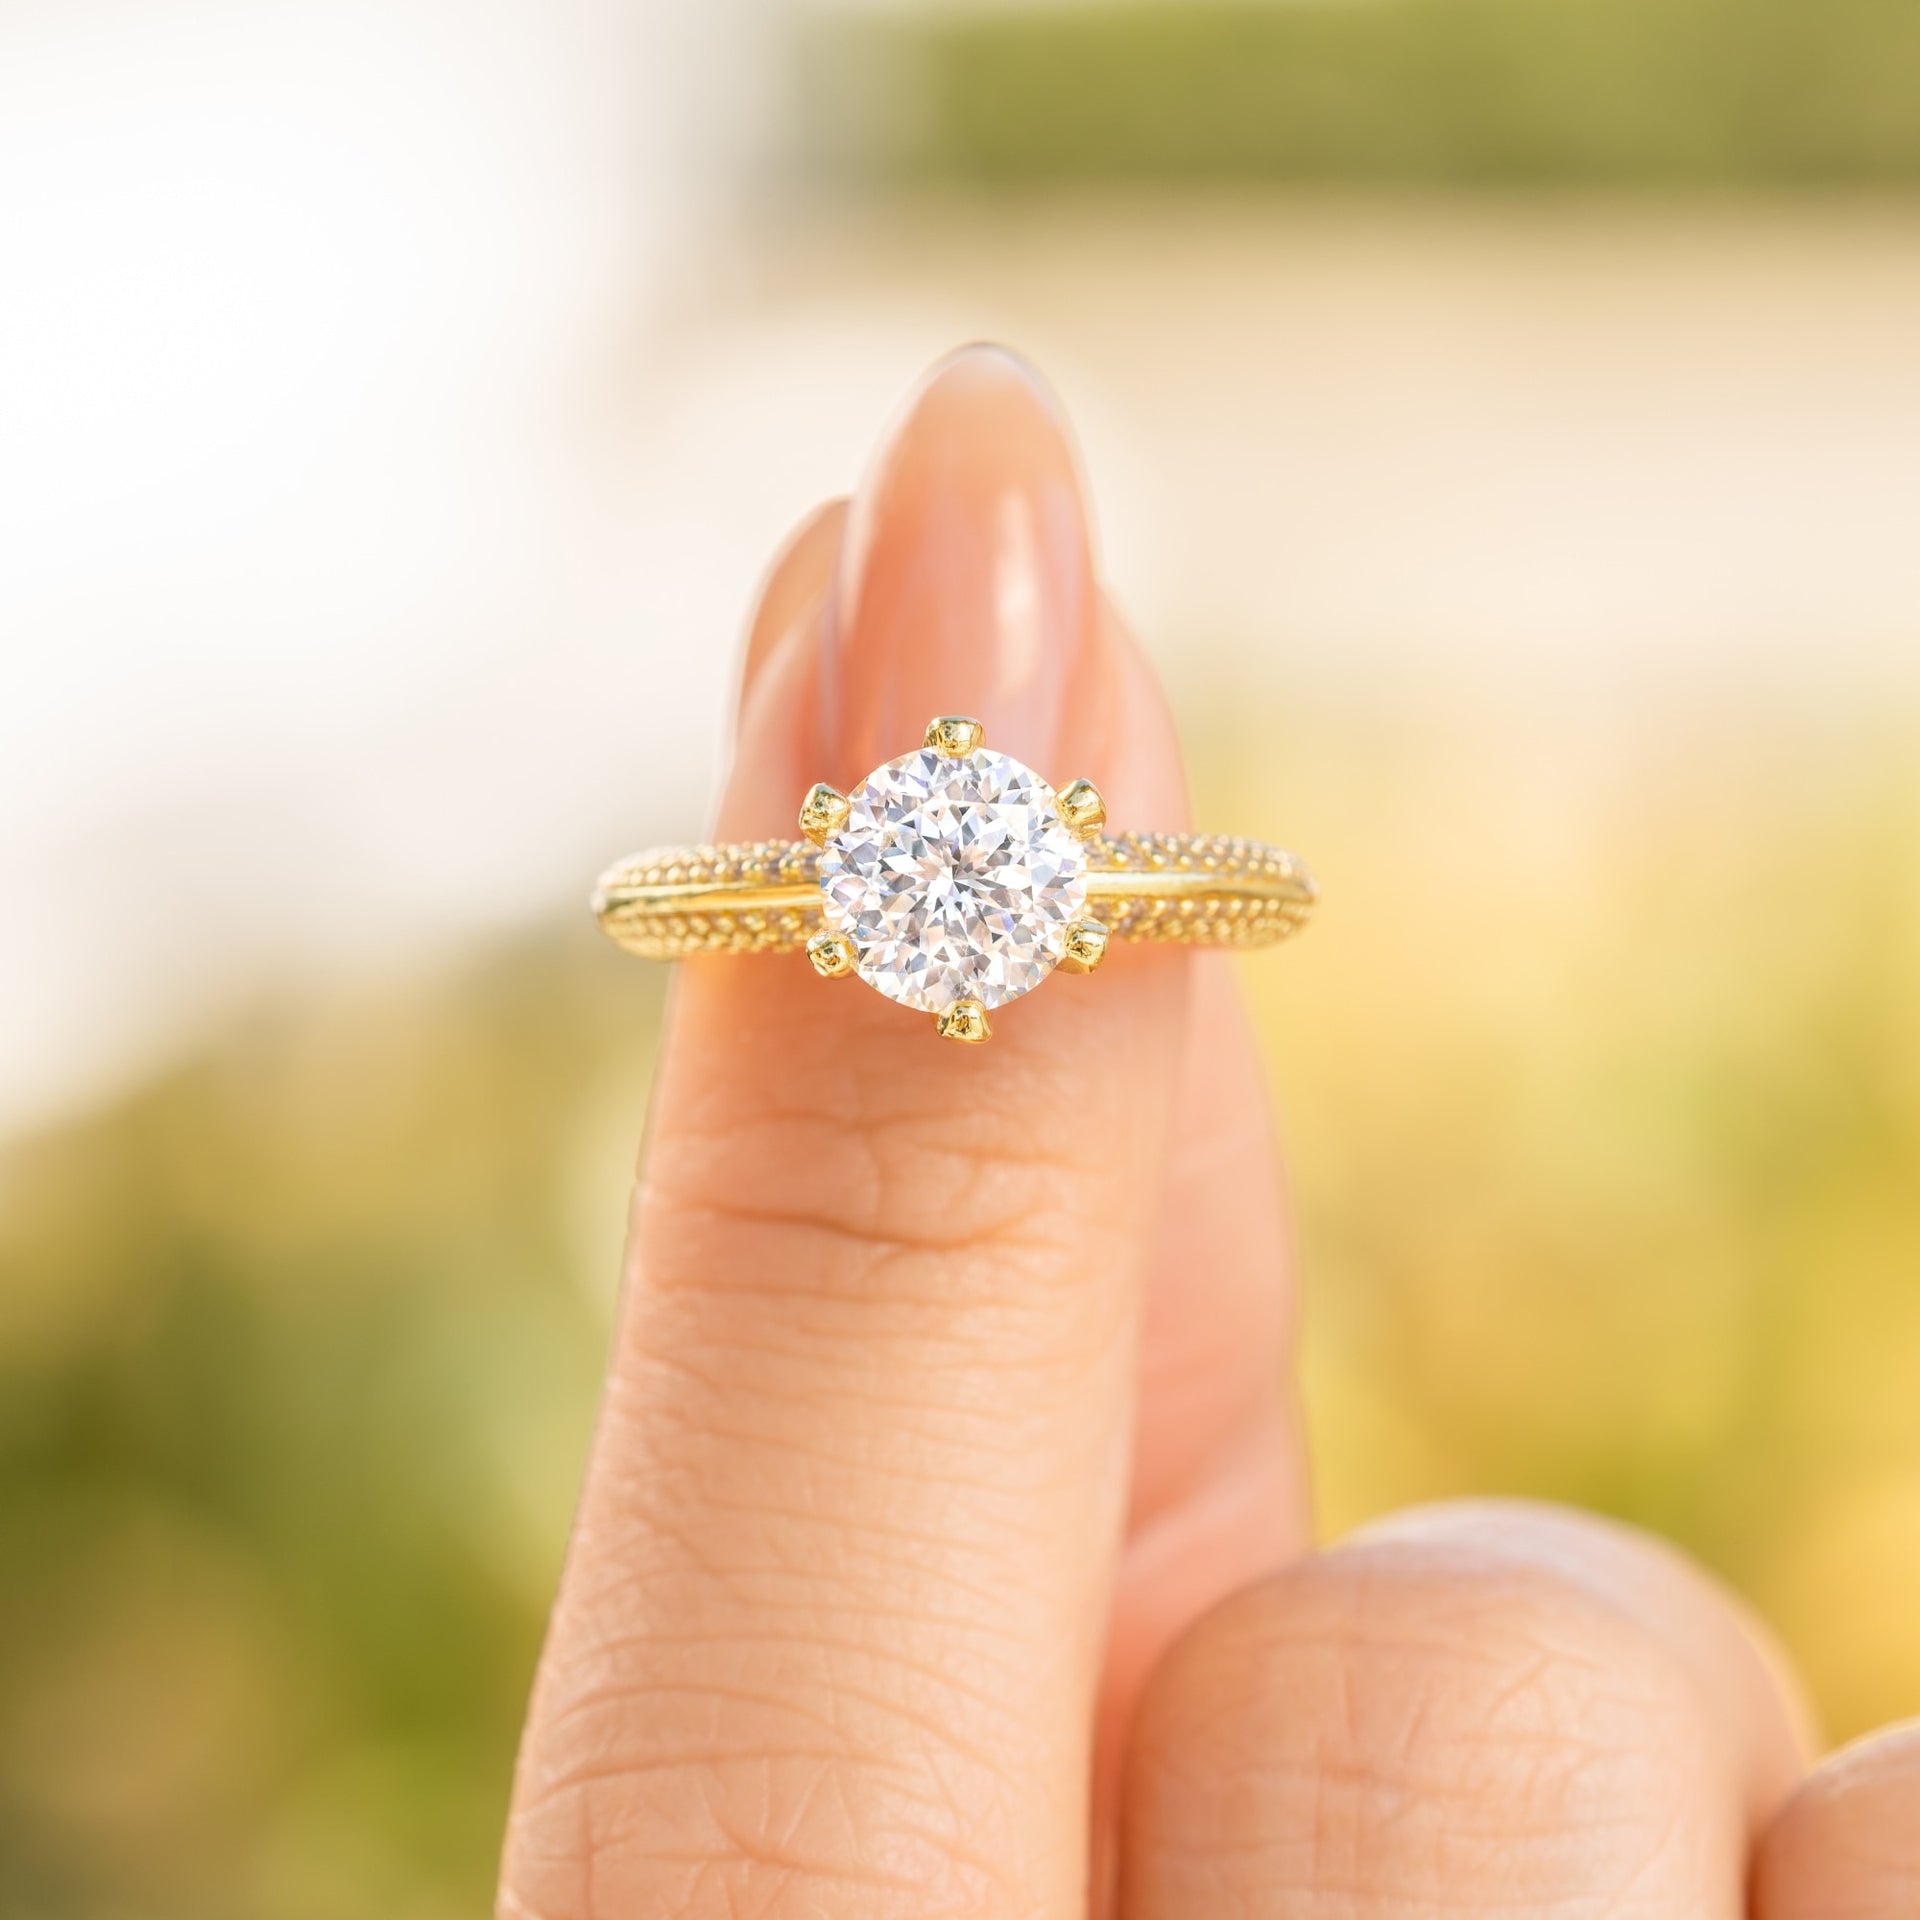 Stunning 2 carat round cut gold engagement ring